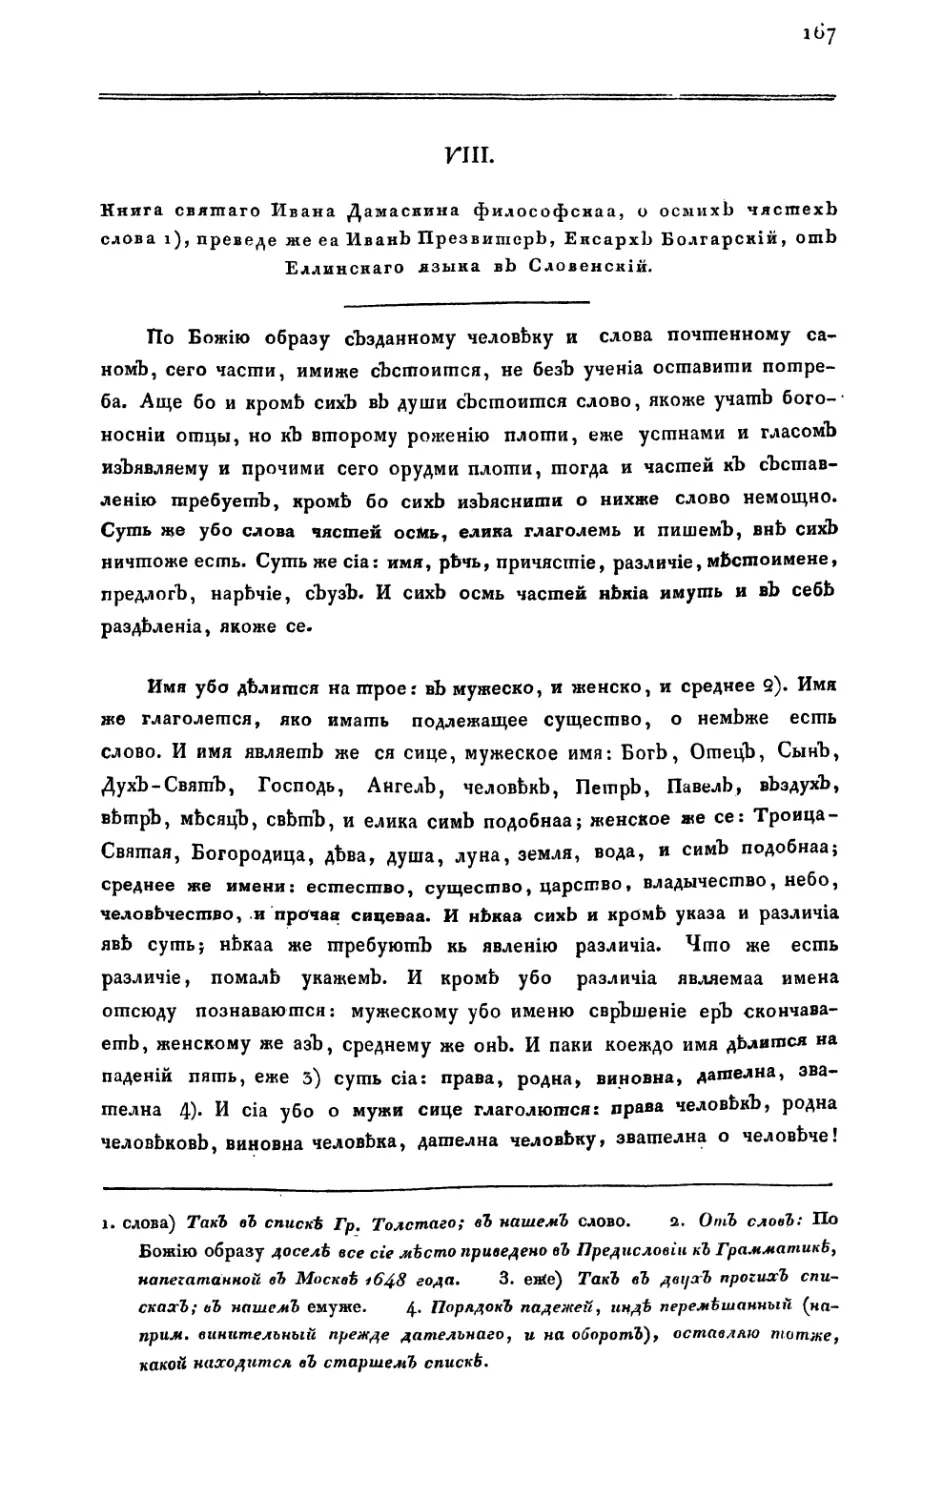 VIII. Иоанна Дамаскина Грамматика, переведенная Ексархом Болгарским